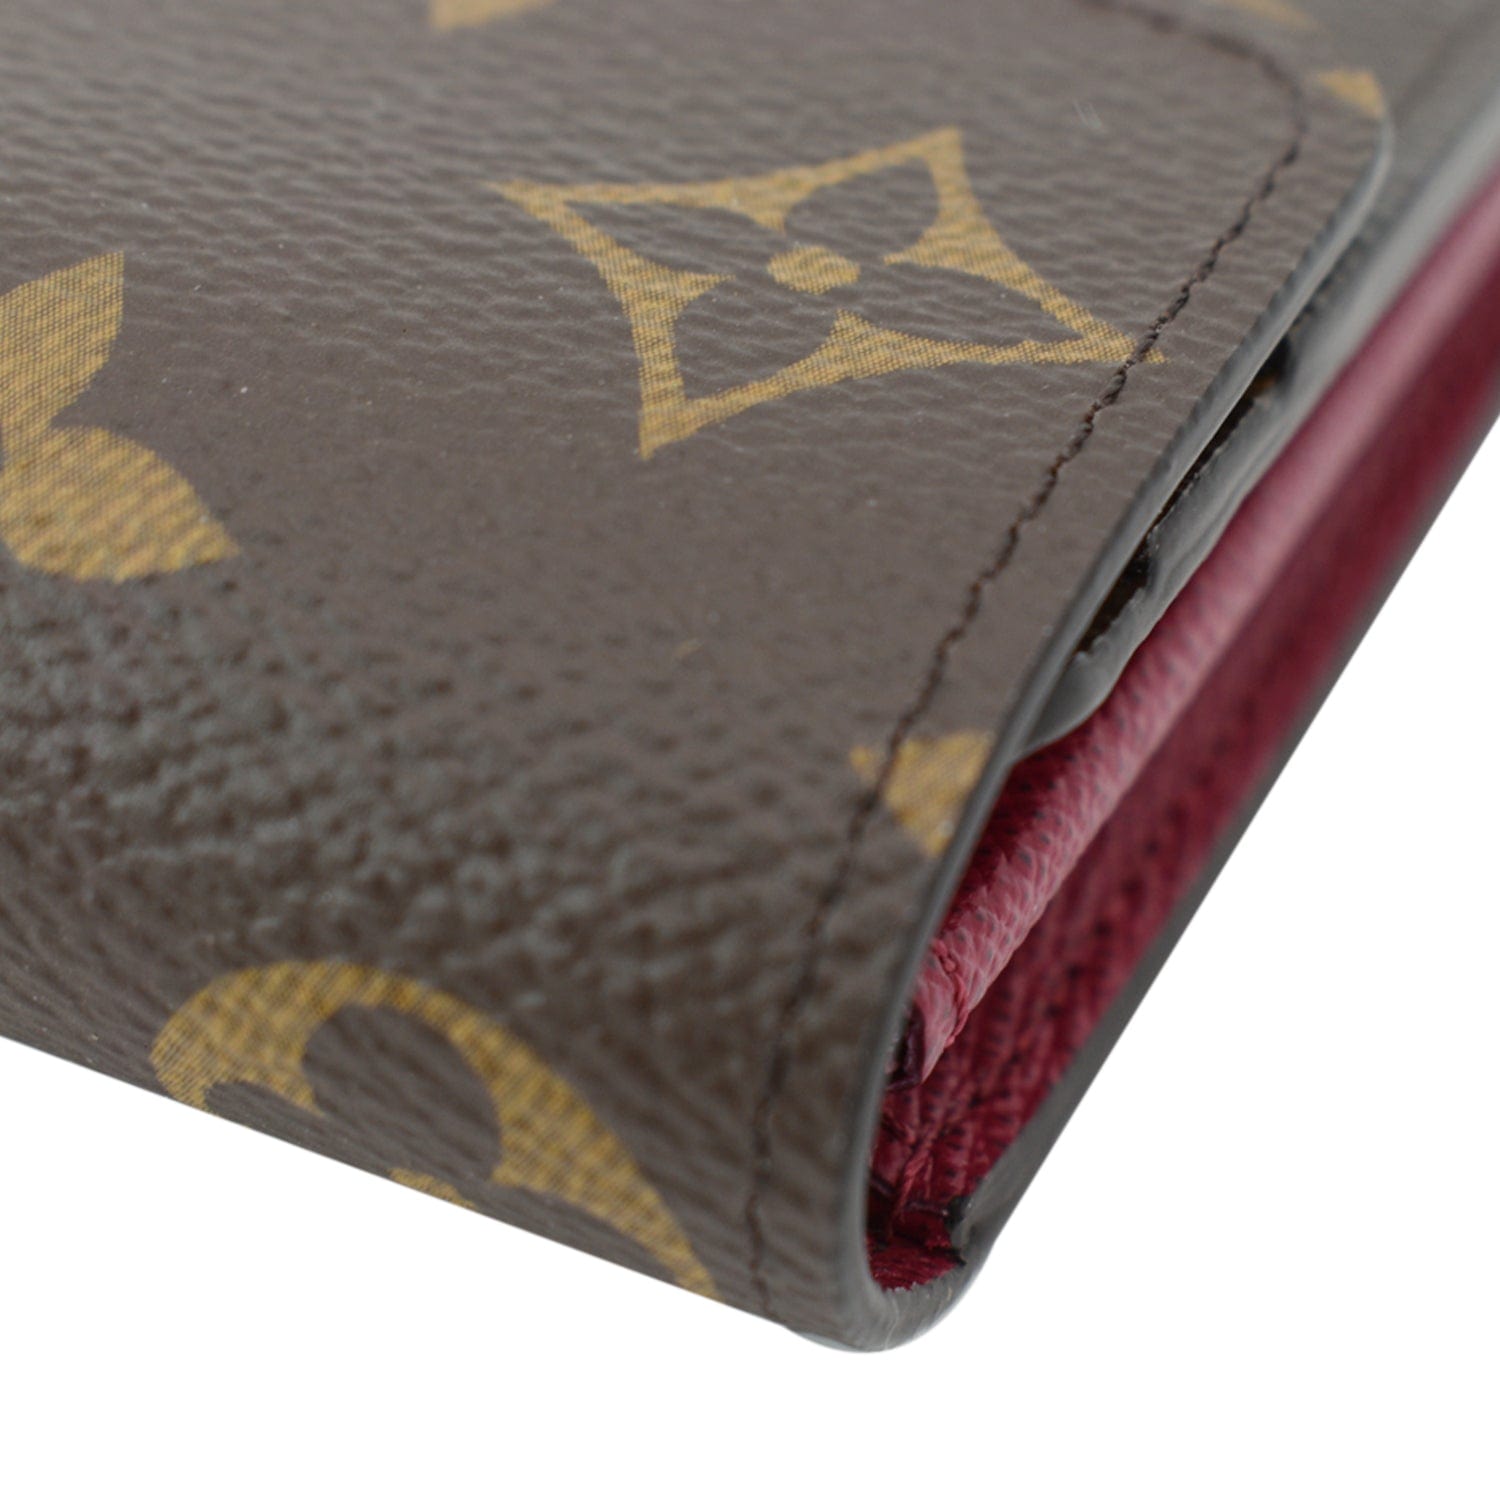 Cloth wallet Louis Vuitton Brown in Cloth - 31754957